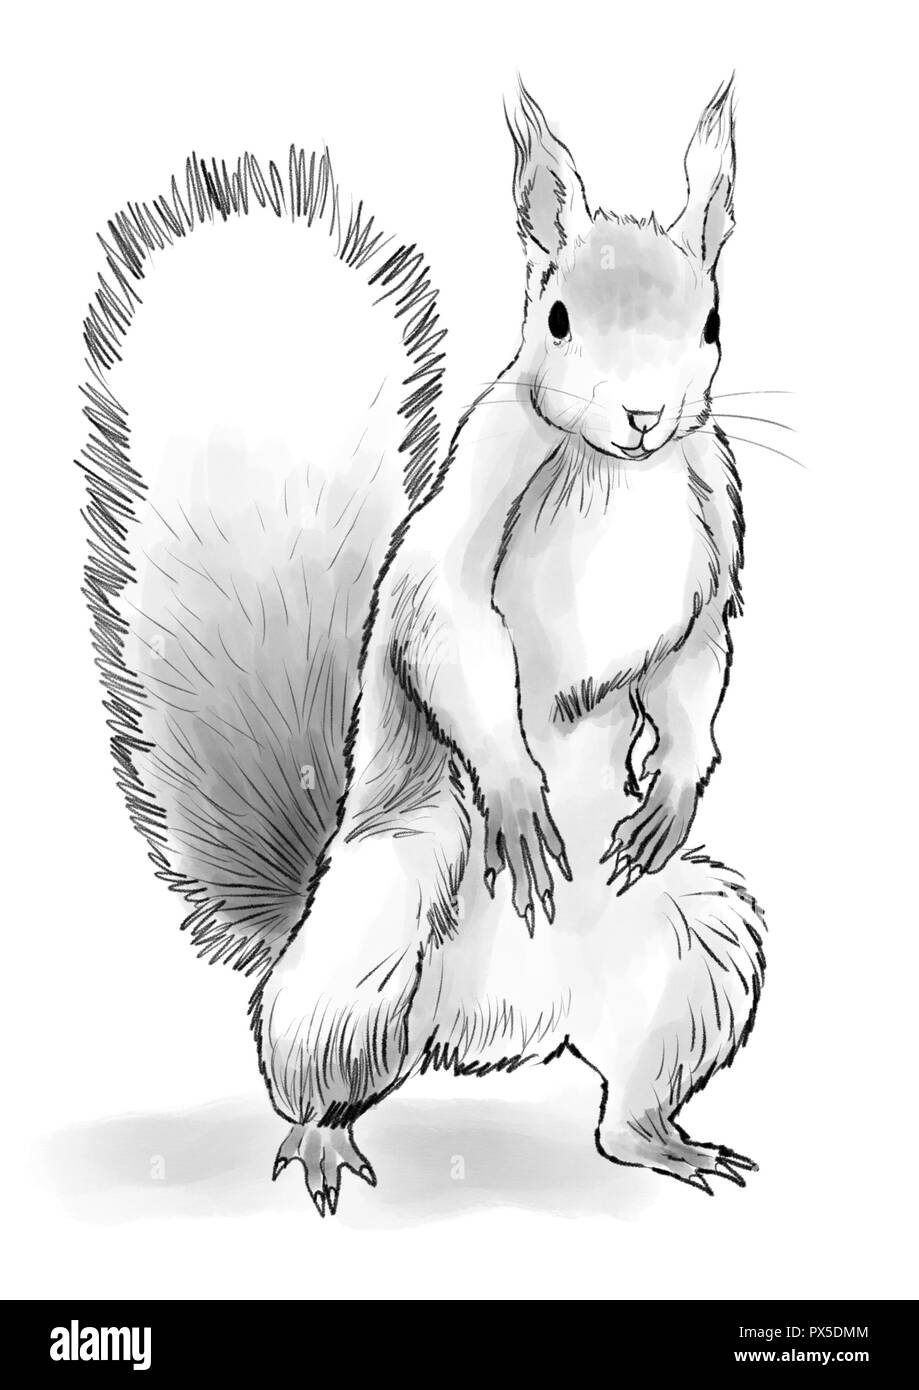 a cute squirrel illustration Stock Photo